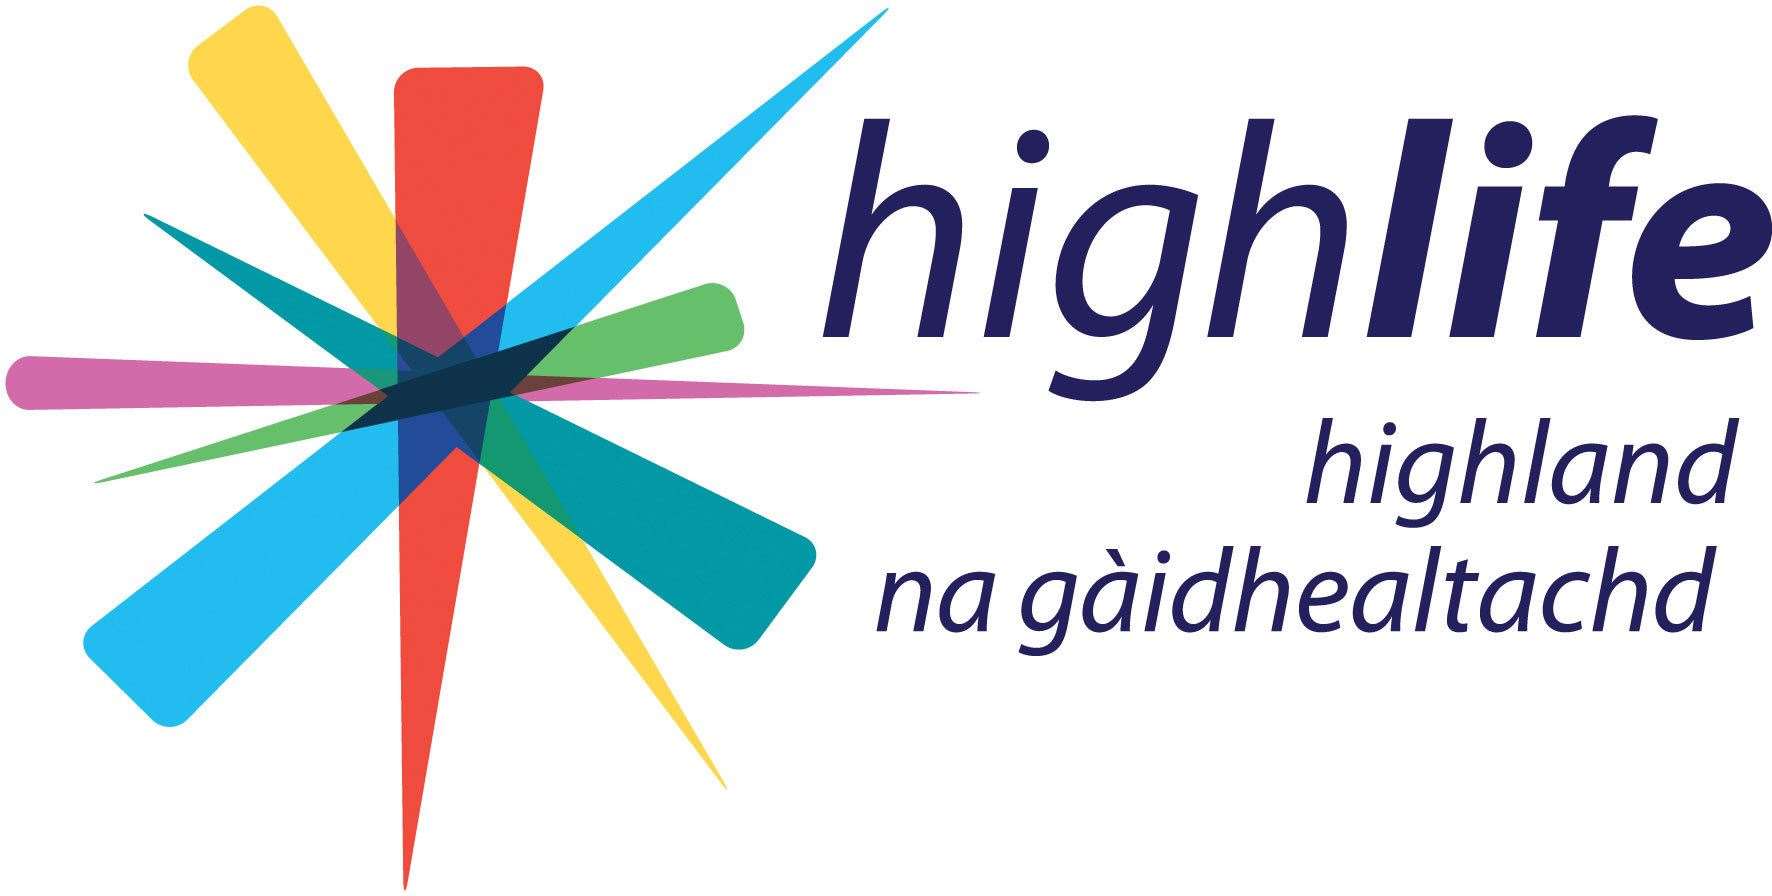 High Life Highland runs the Highland Archive Centre.